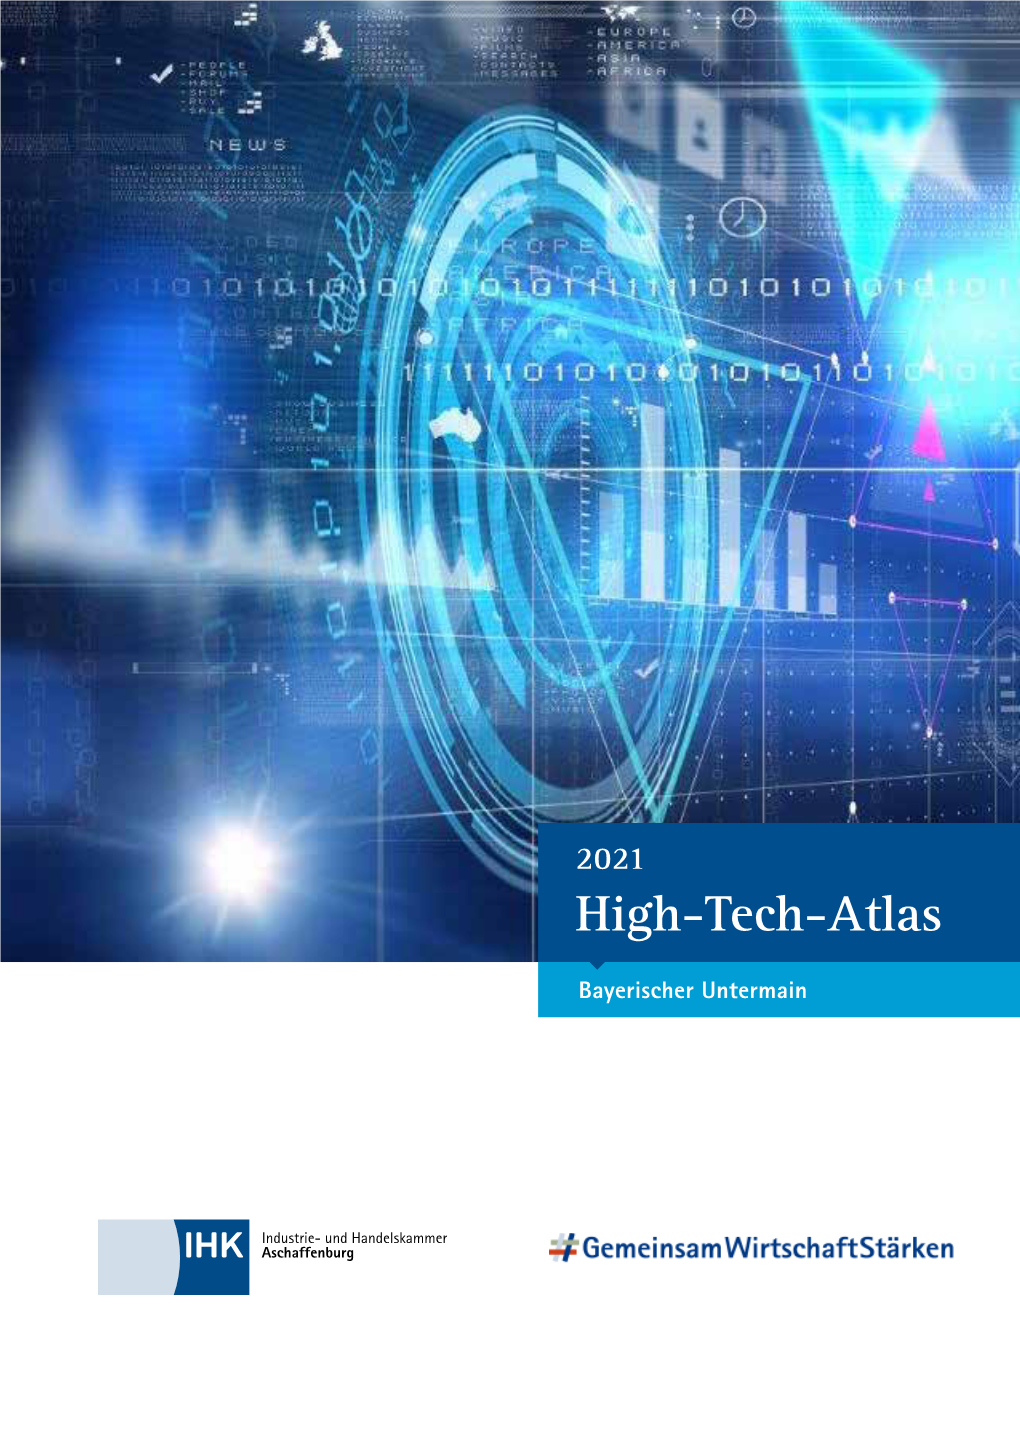 High-Tech-Atlas